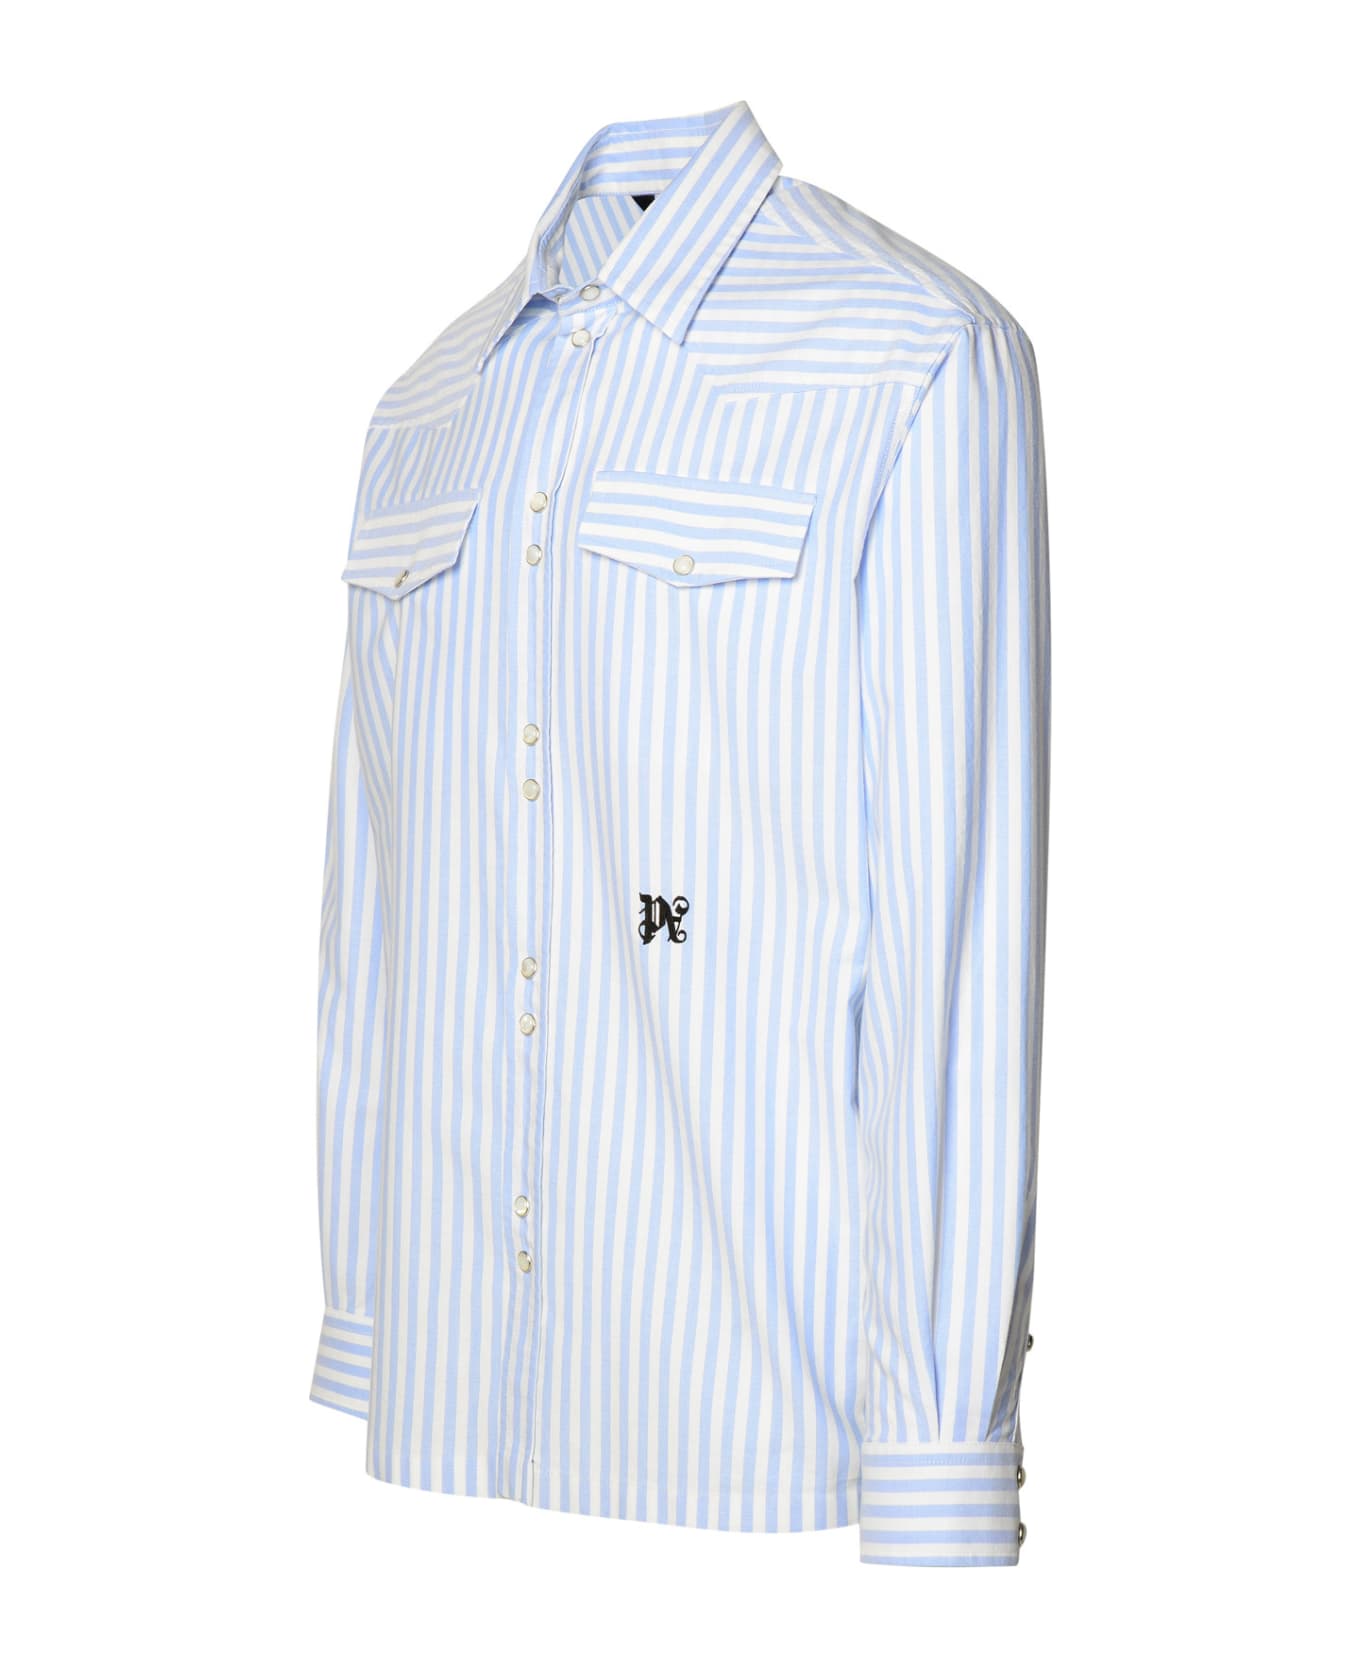 Palm Angels Light Blue Cotton Shirt - STIPES WHITE LIGHT BLUE